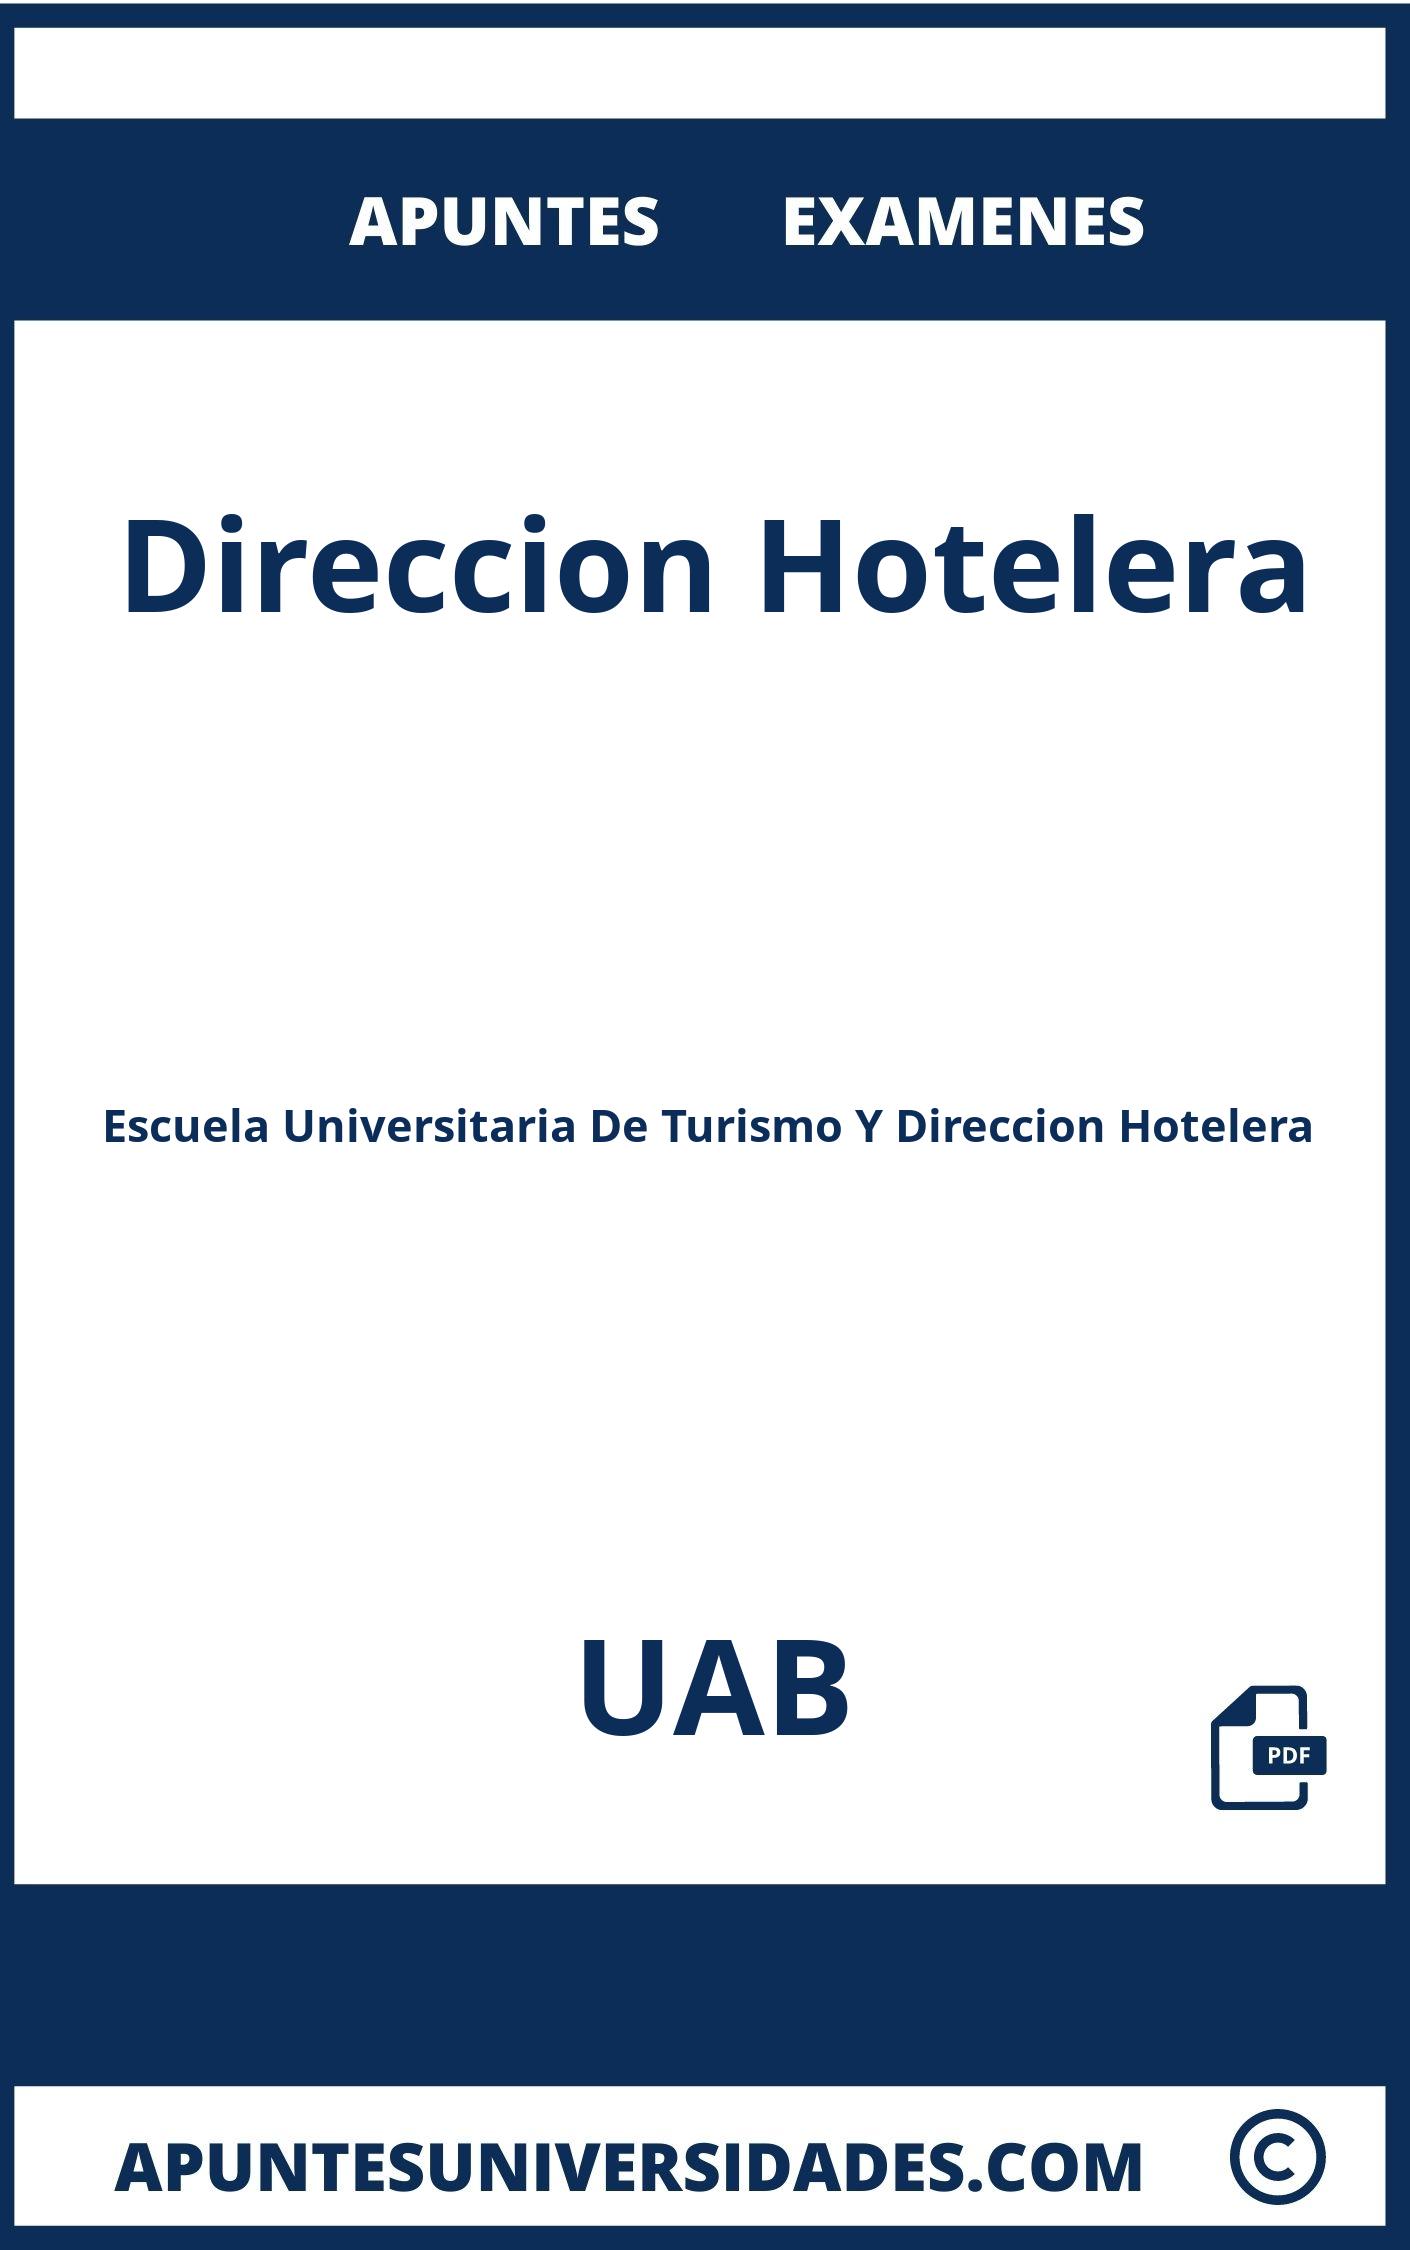 Direccion Hotelera UAB Apuntes Examenes